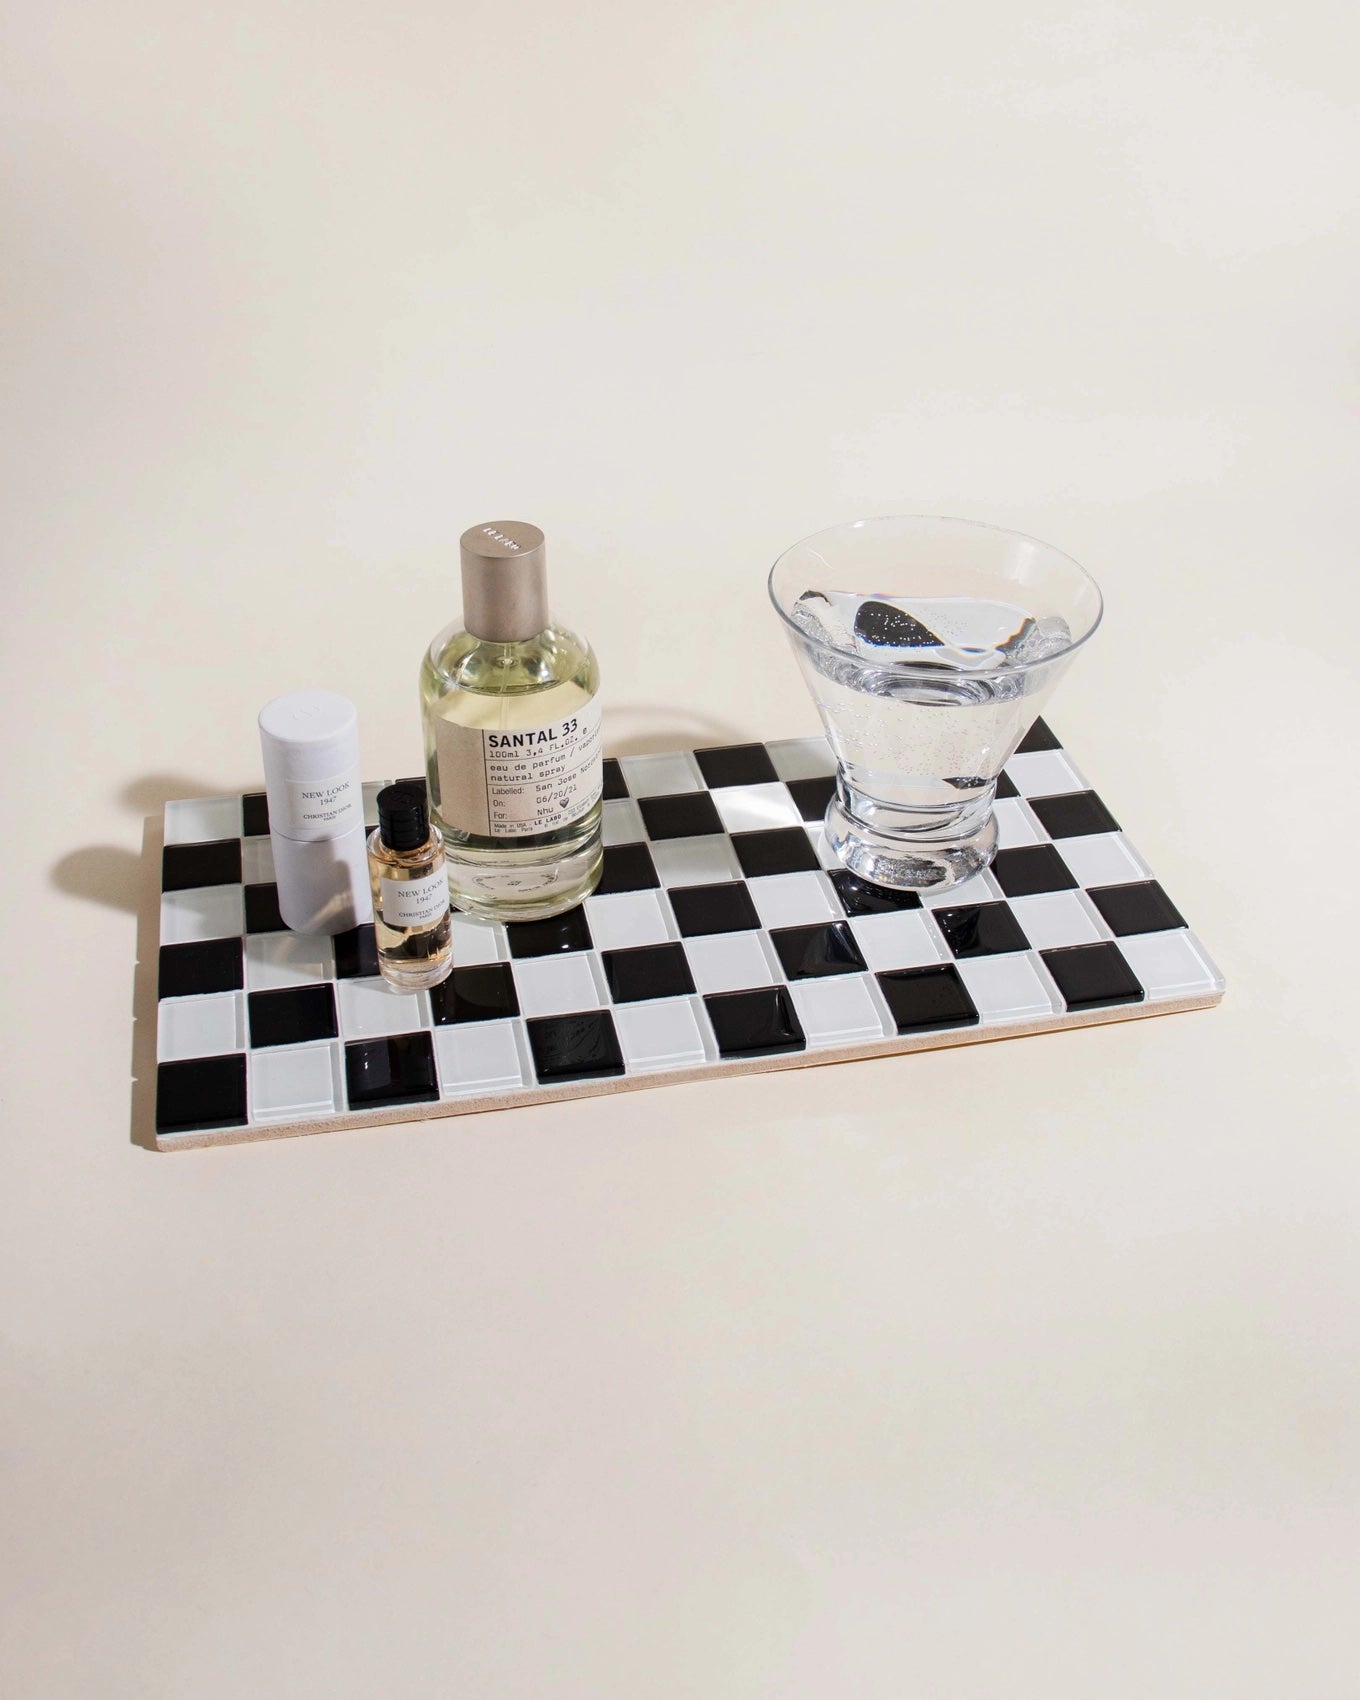 6x12 Glass Tile Tray in Black & White